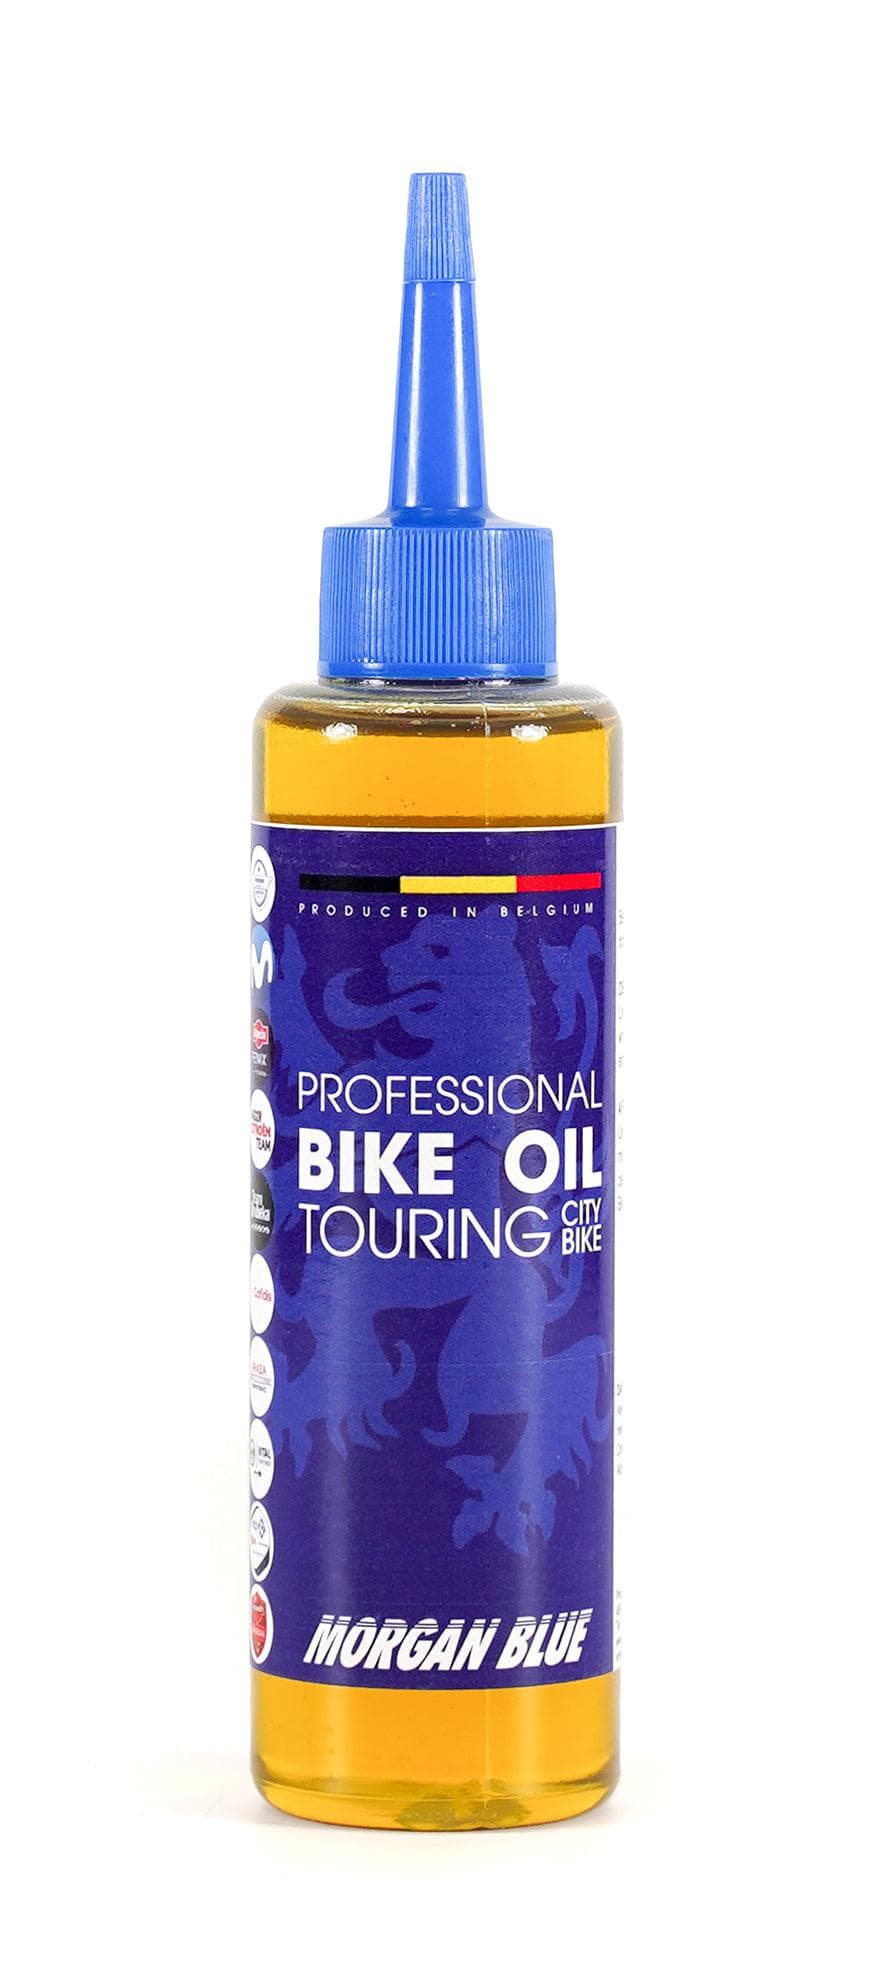 Morgan Blue Bike Oil Touring & Citybike (125cc, Bottle)